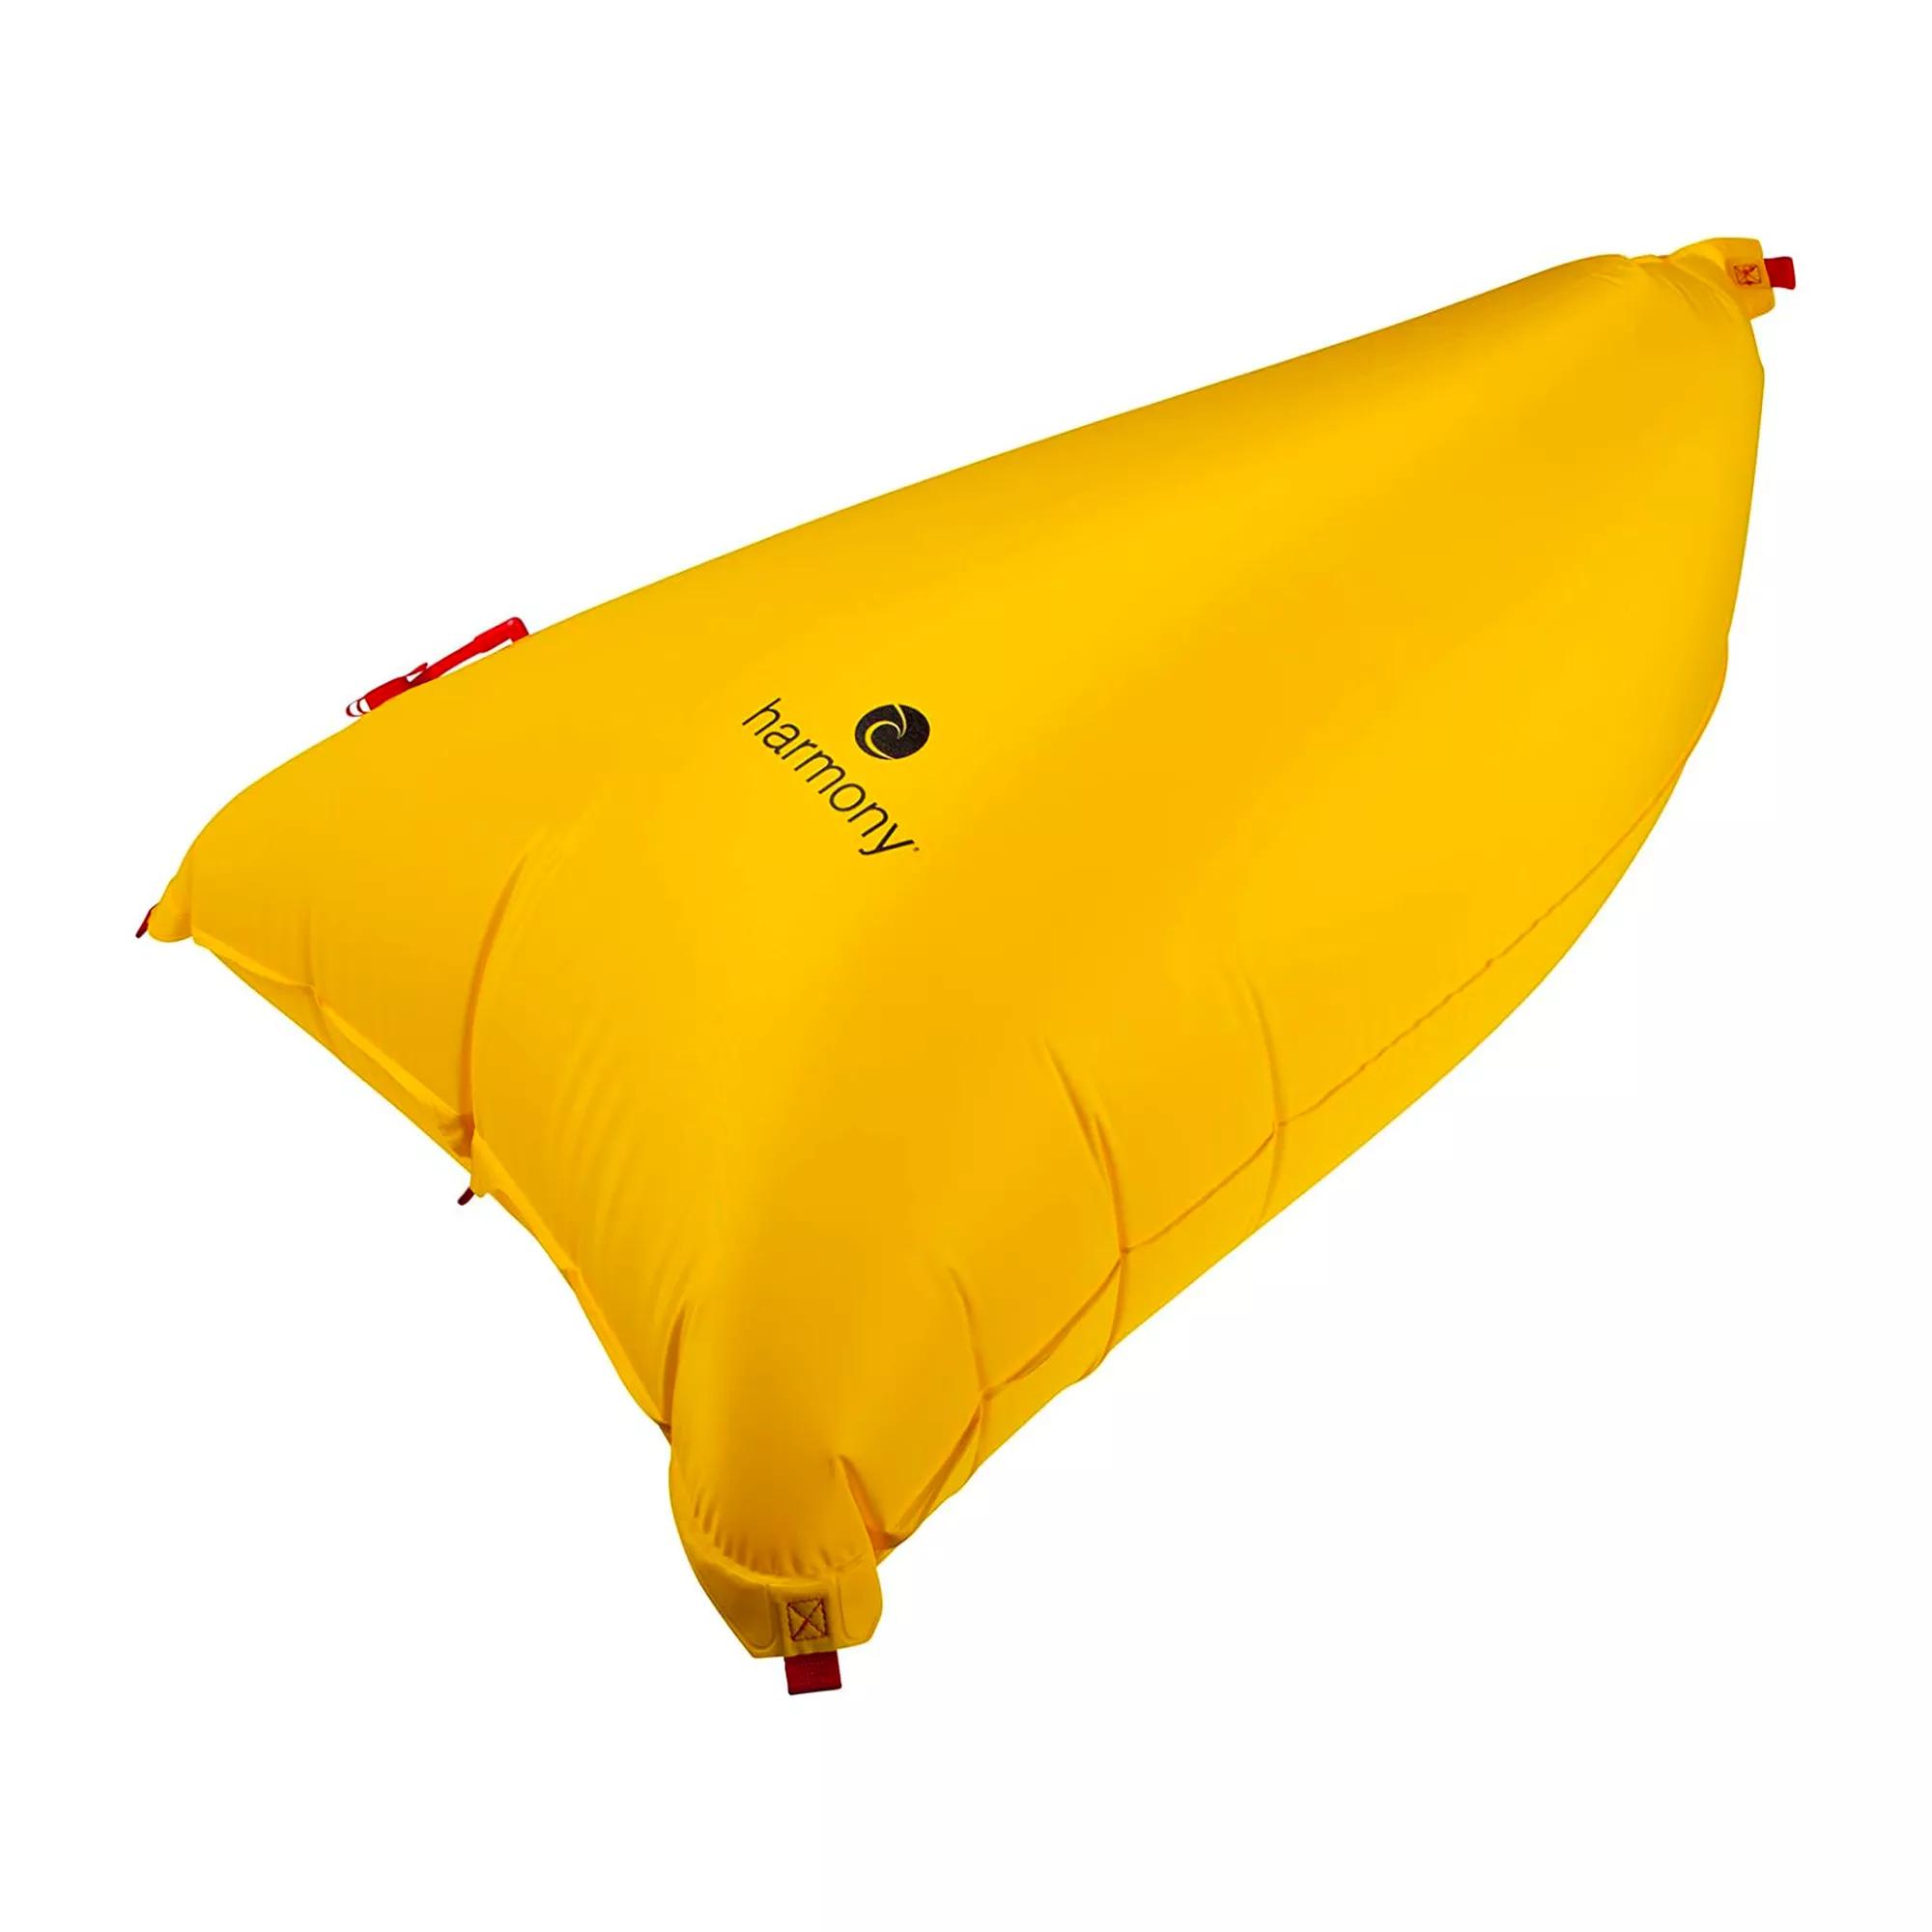 PERCEPTION - 3D Nylon End Float Bag - 54" - Yellow - 8023187 - TOP